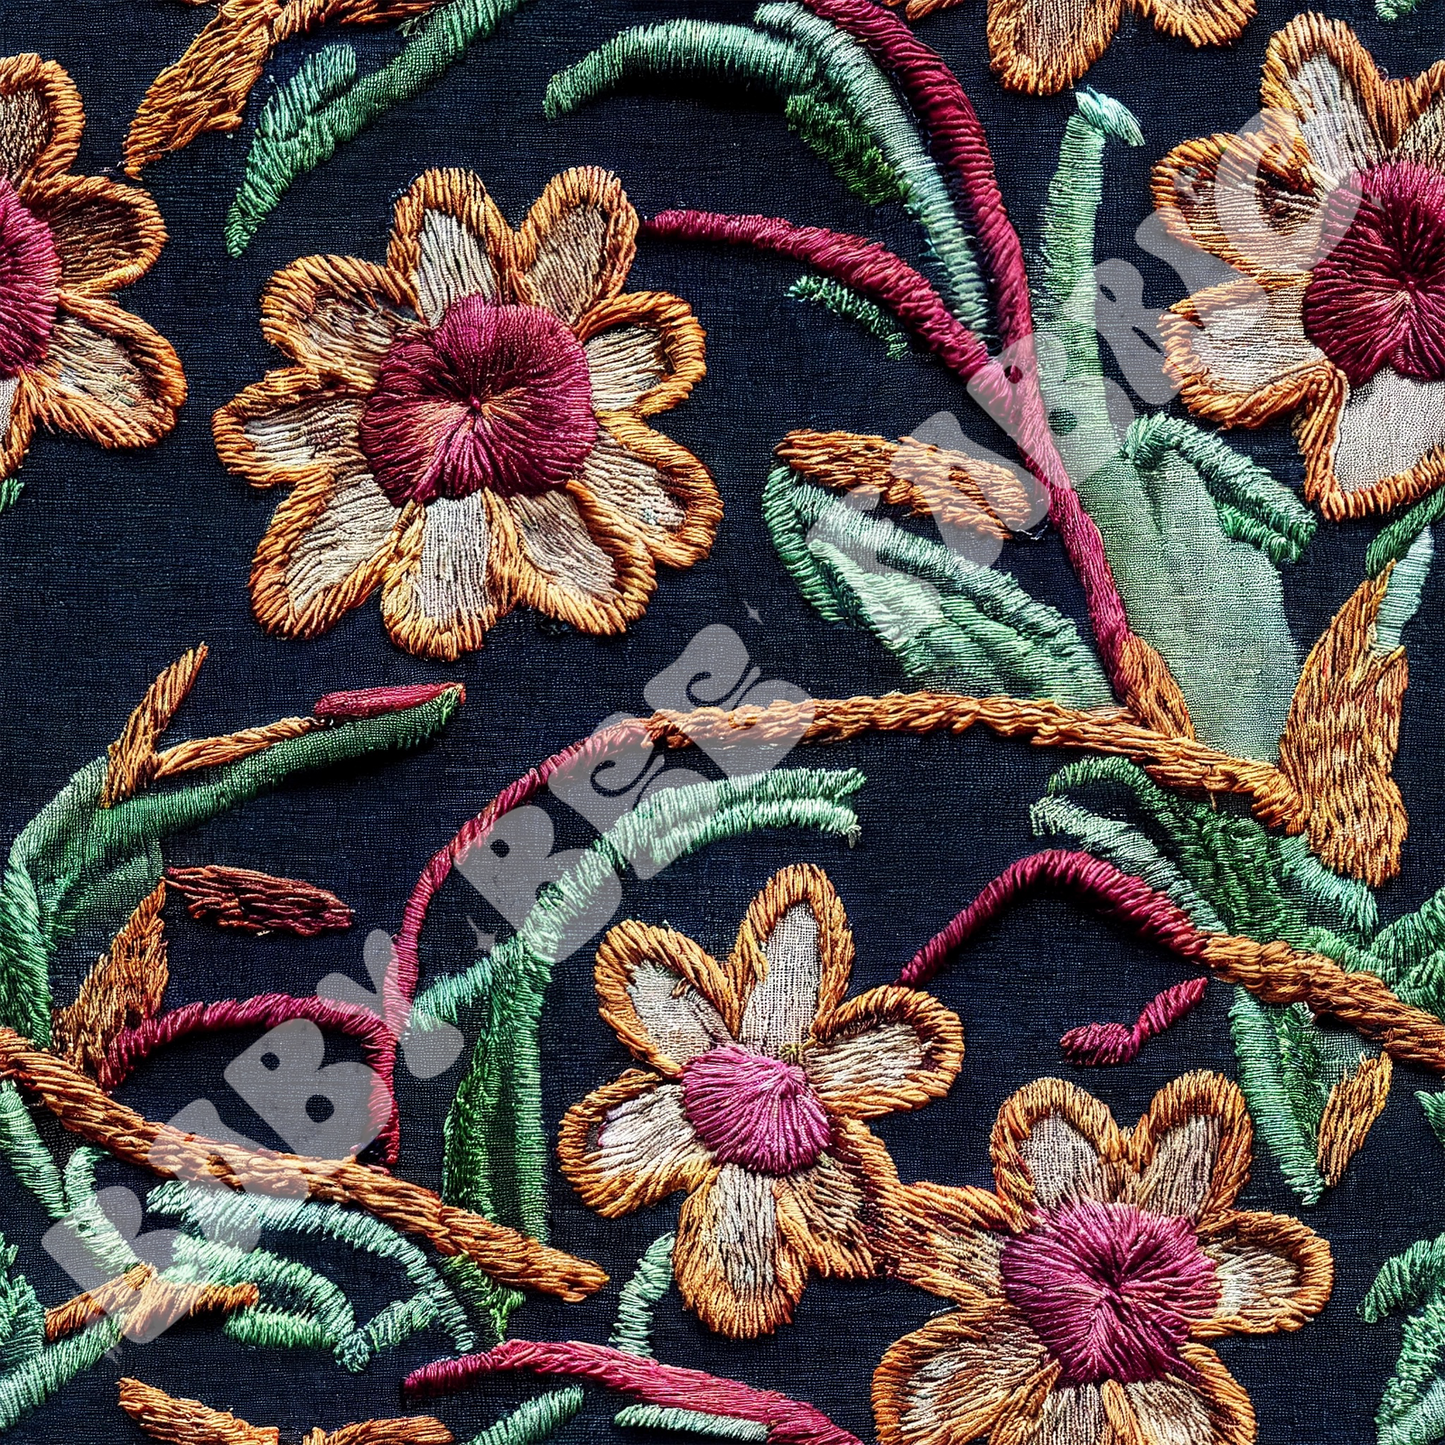 Night Garden Embroidery